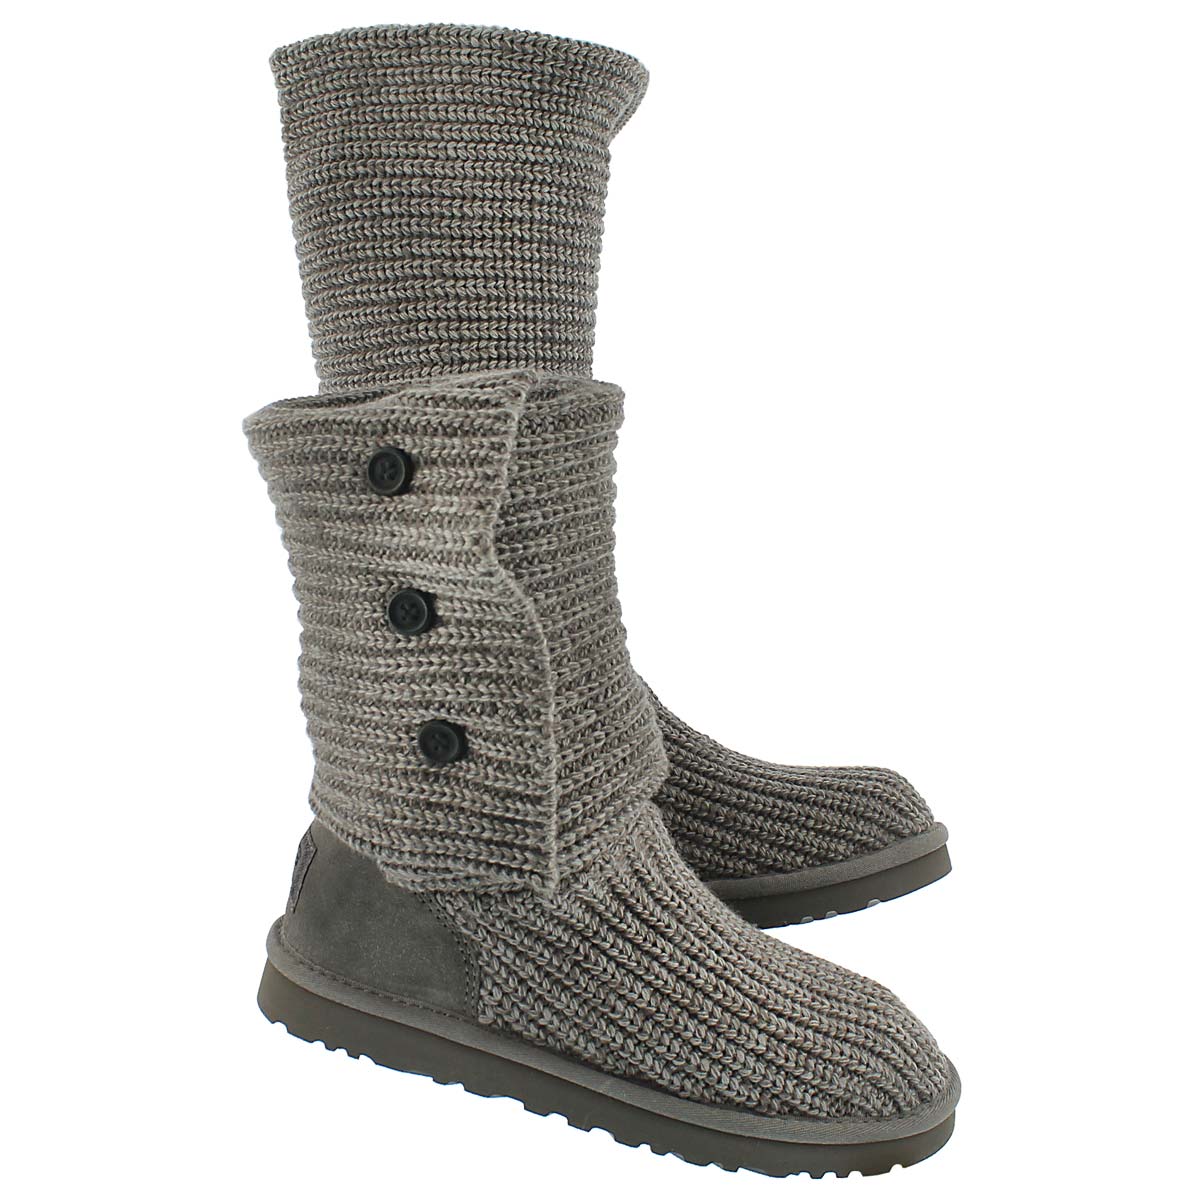 UGG Australia Women's CLASSIC CARDY knit sheepskin fashion boots